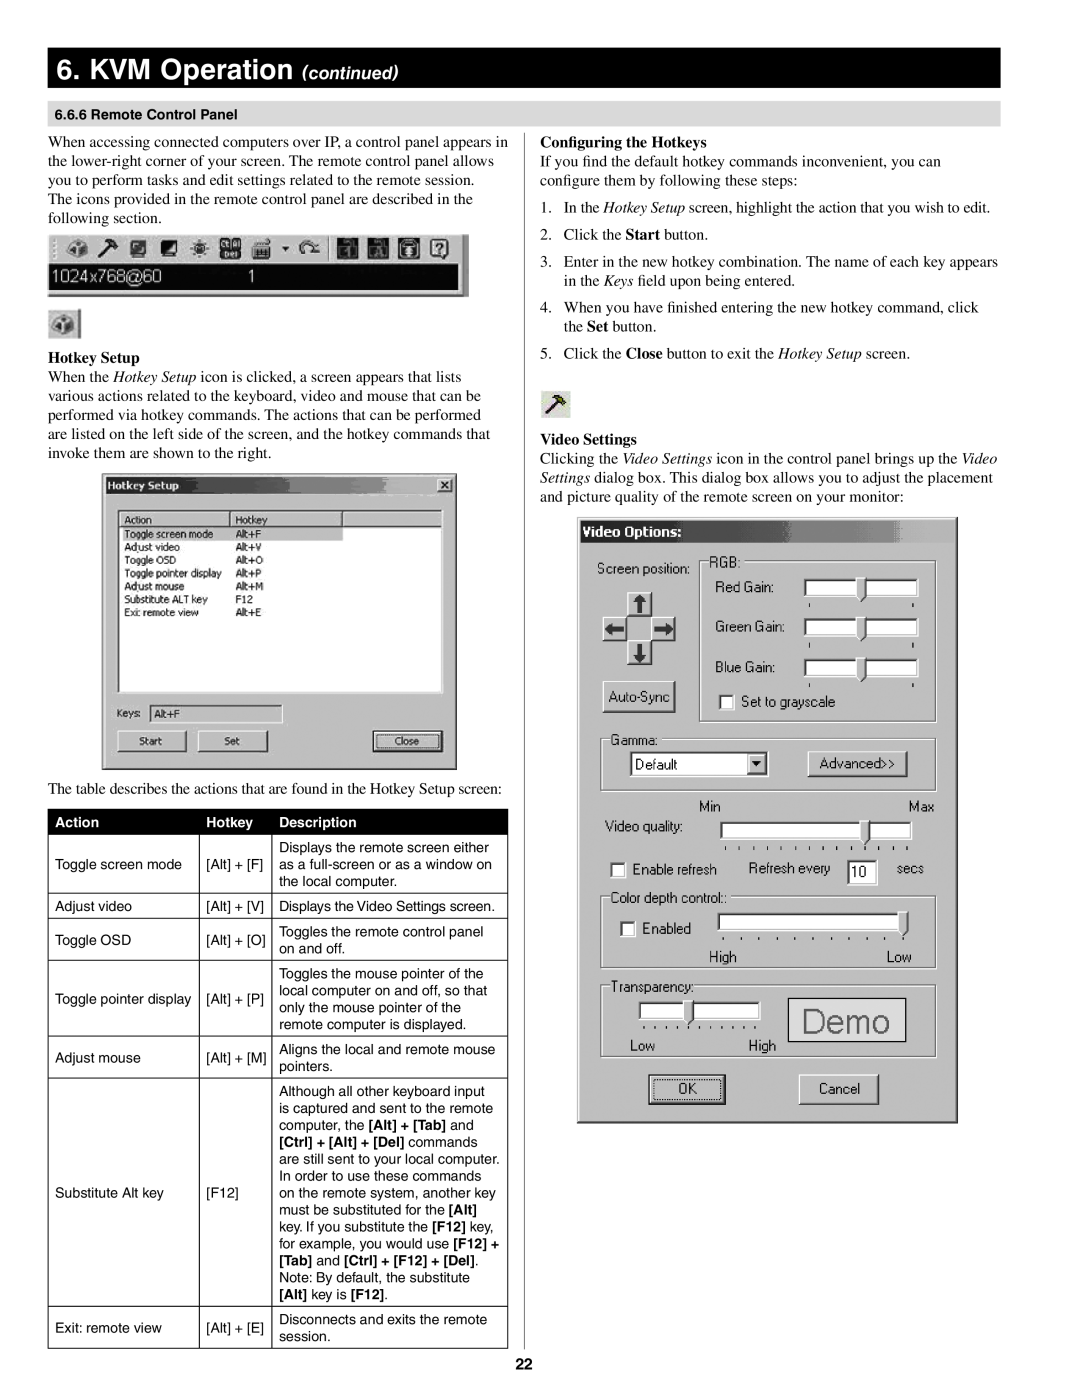 Tripp Lite B022-U08-IP owner manual Hotkey Setup, Configuring the Hotkeys, Video Settings, KVM Operation continued 